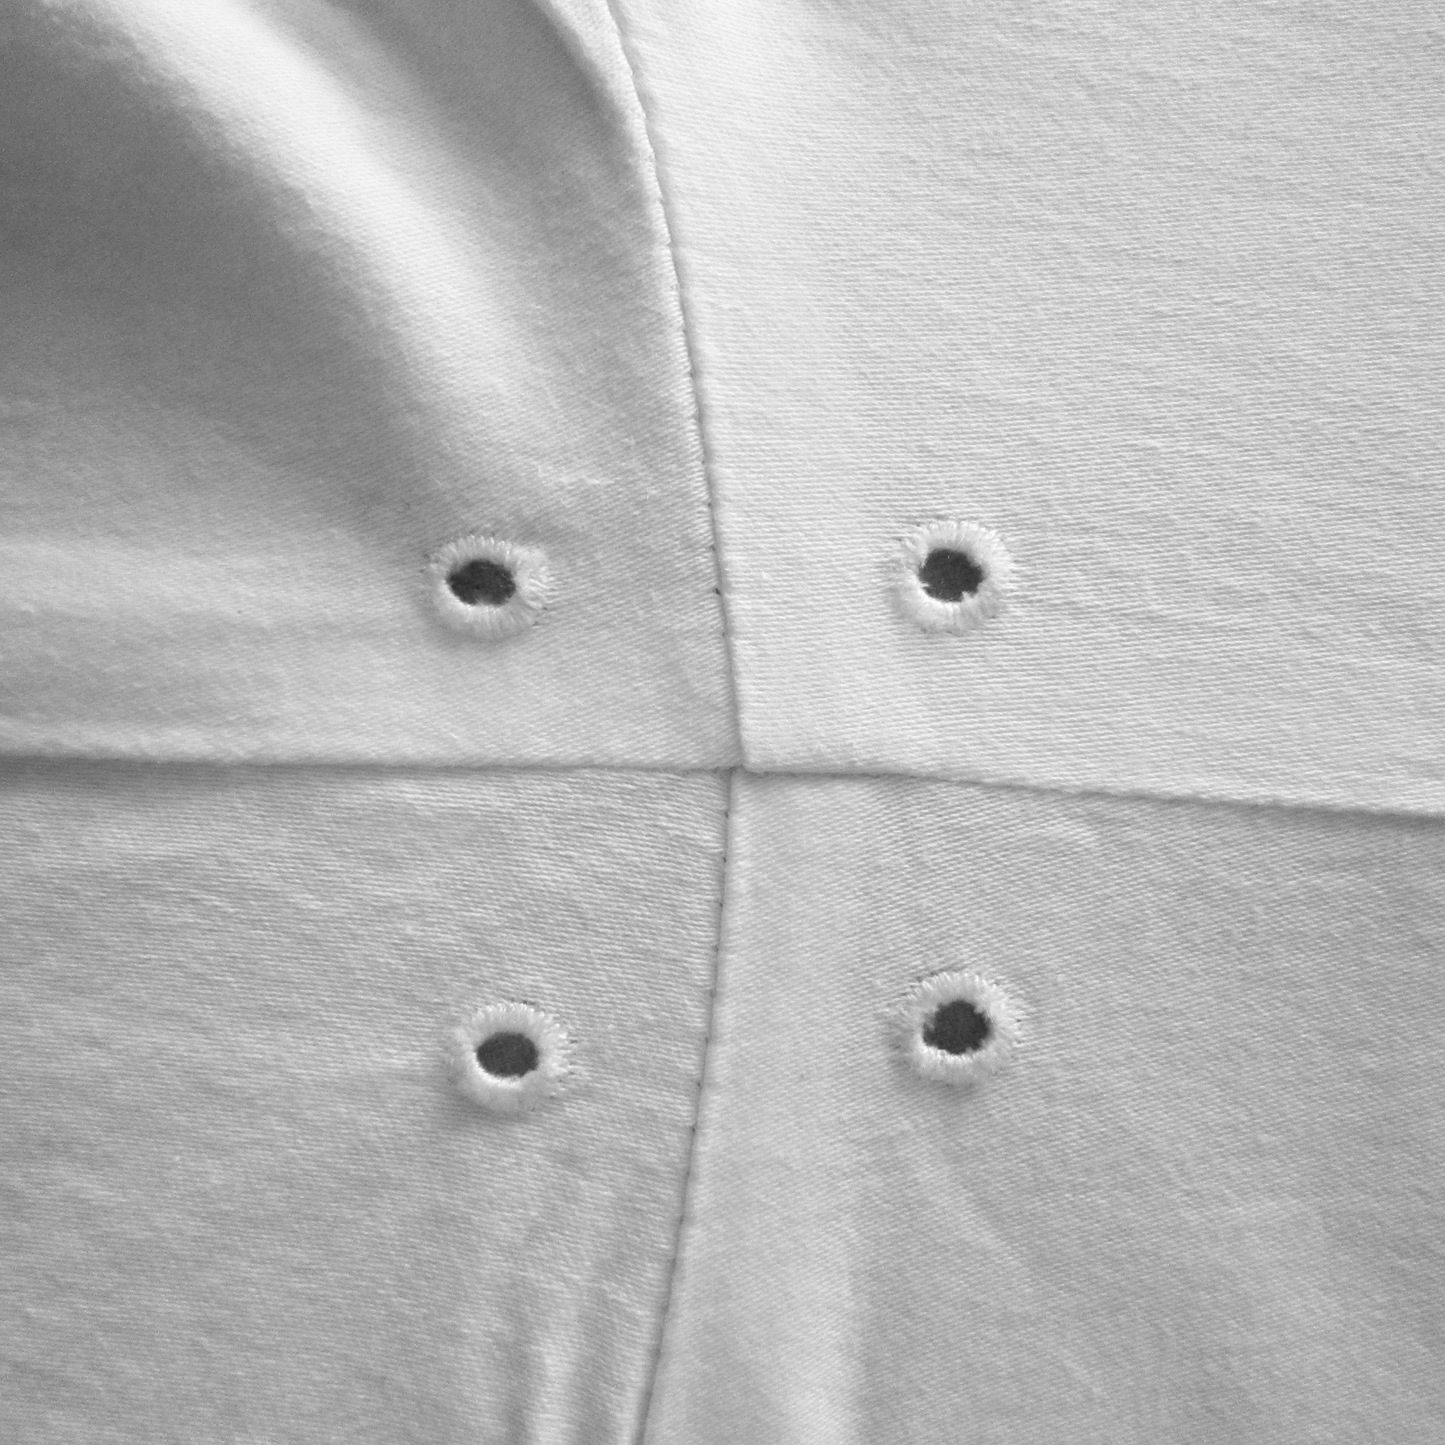 Ladies PREMIUM white chef jacket with short sleeves, Organic cotton